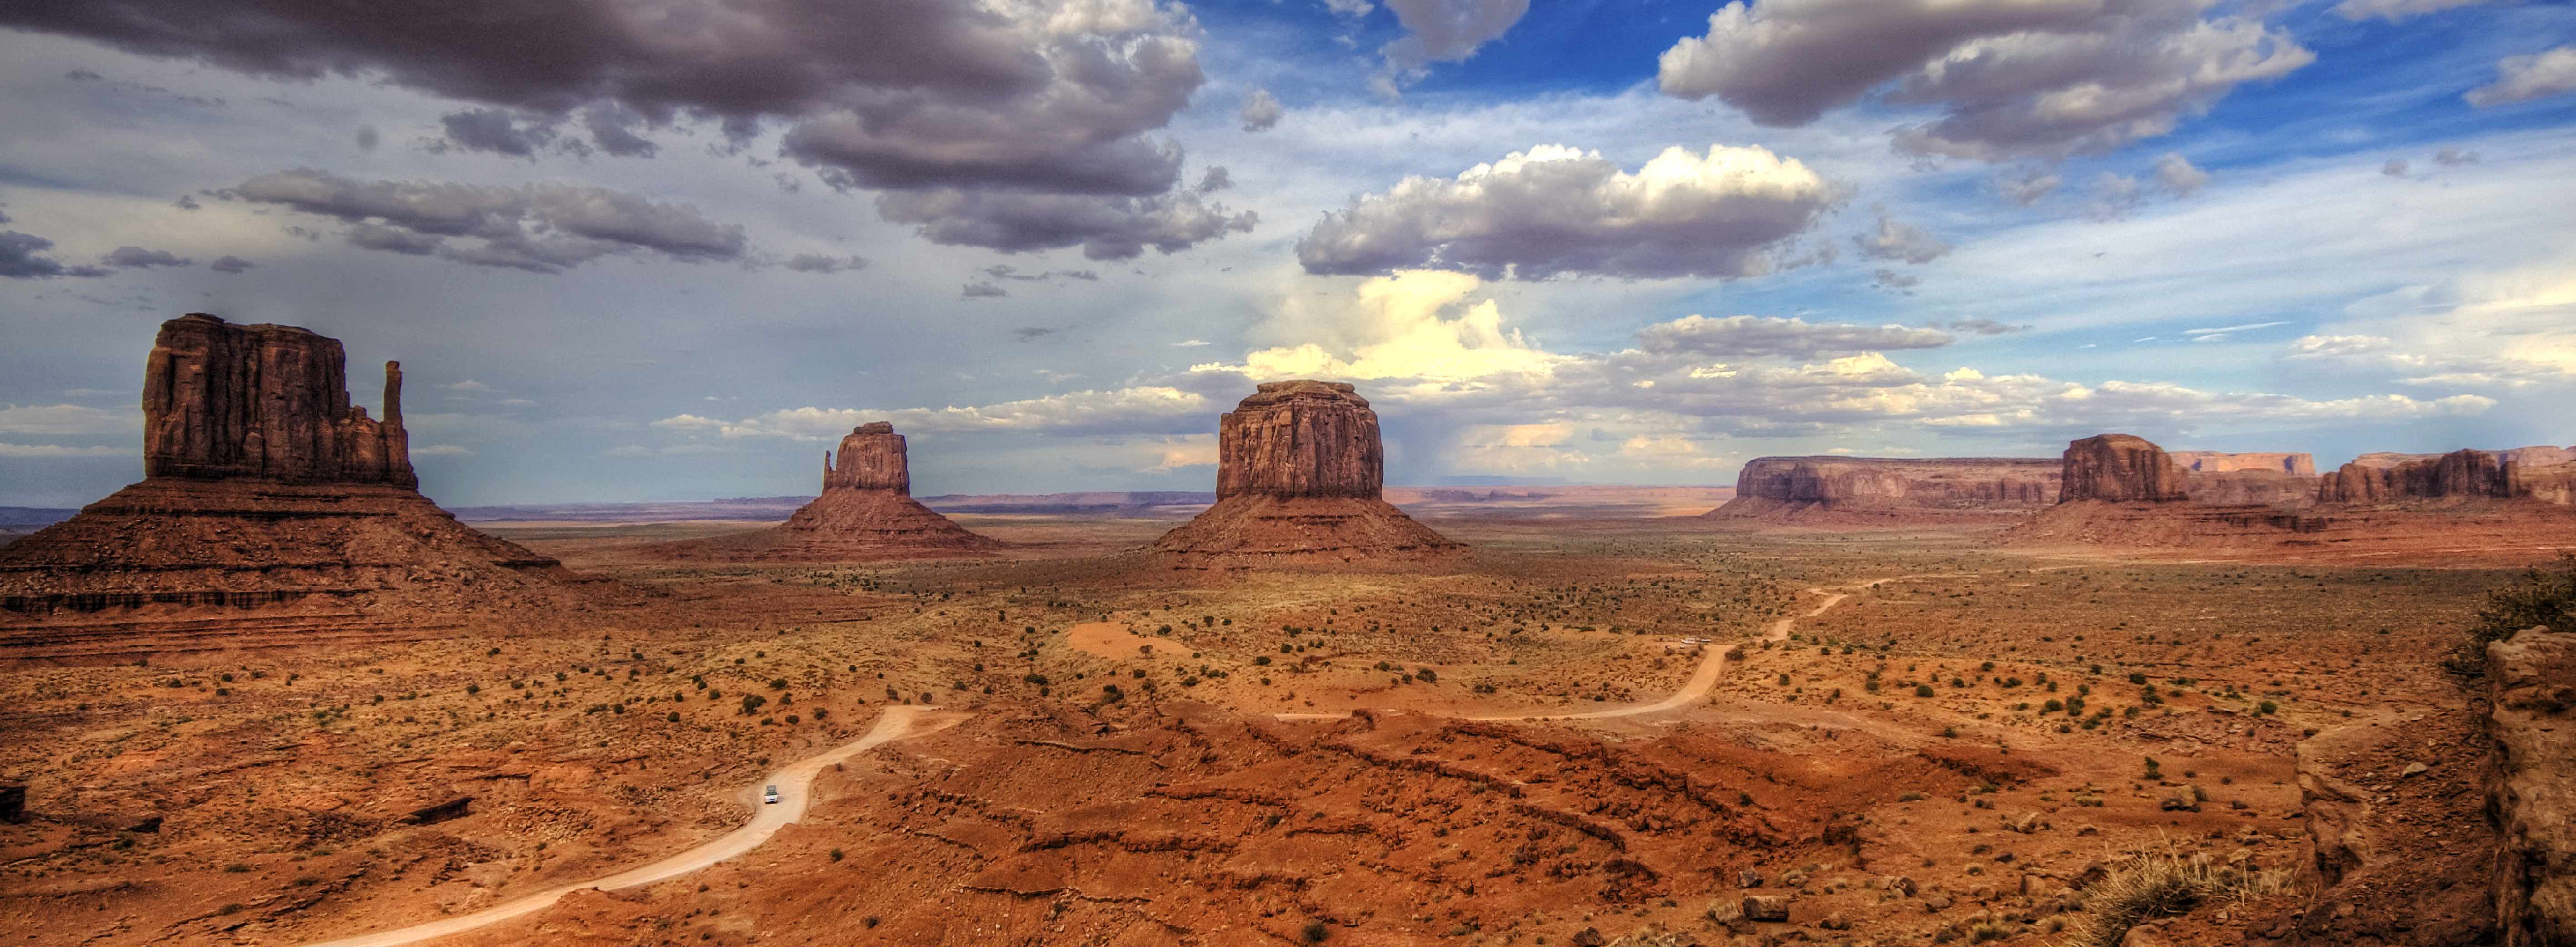 Landscape of the Navajo Reservation